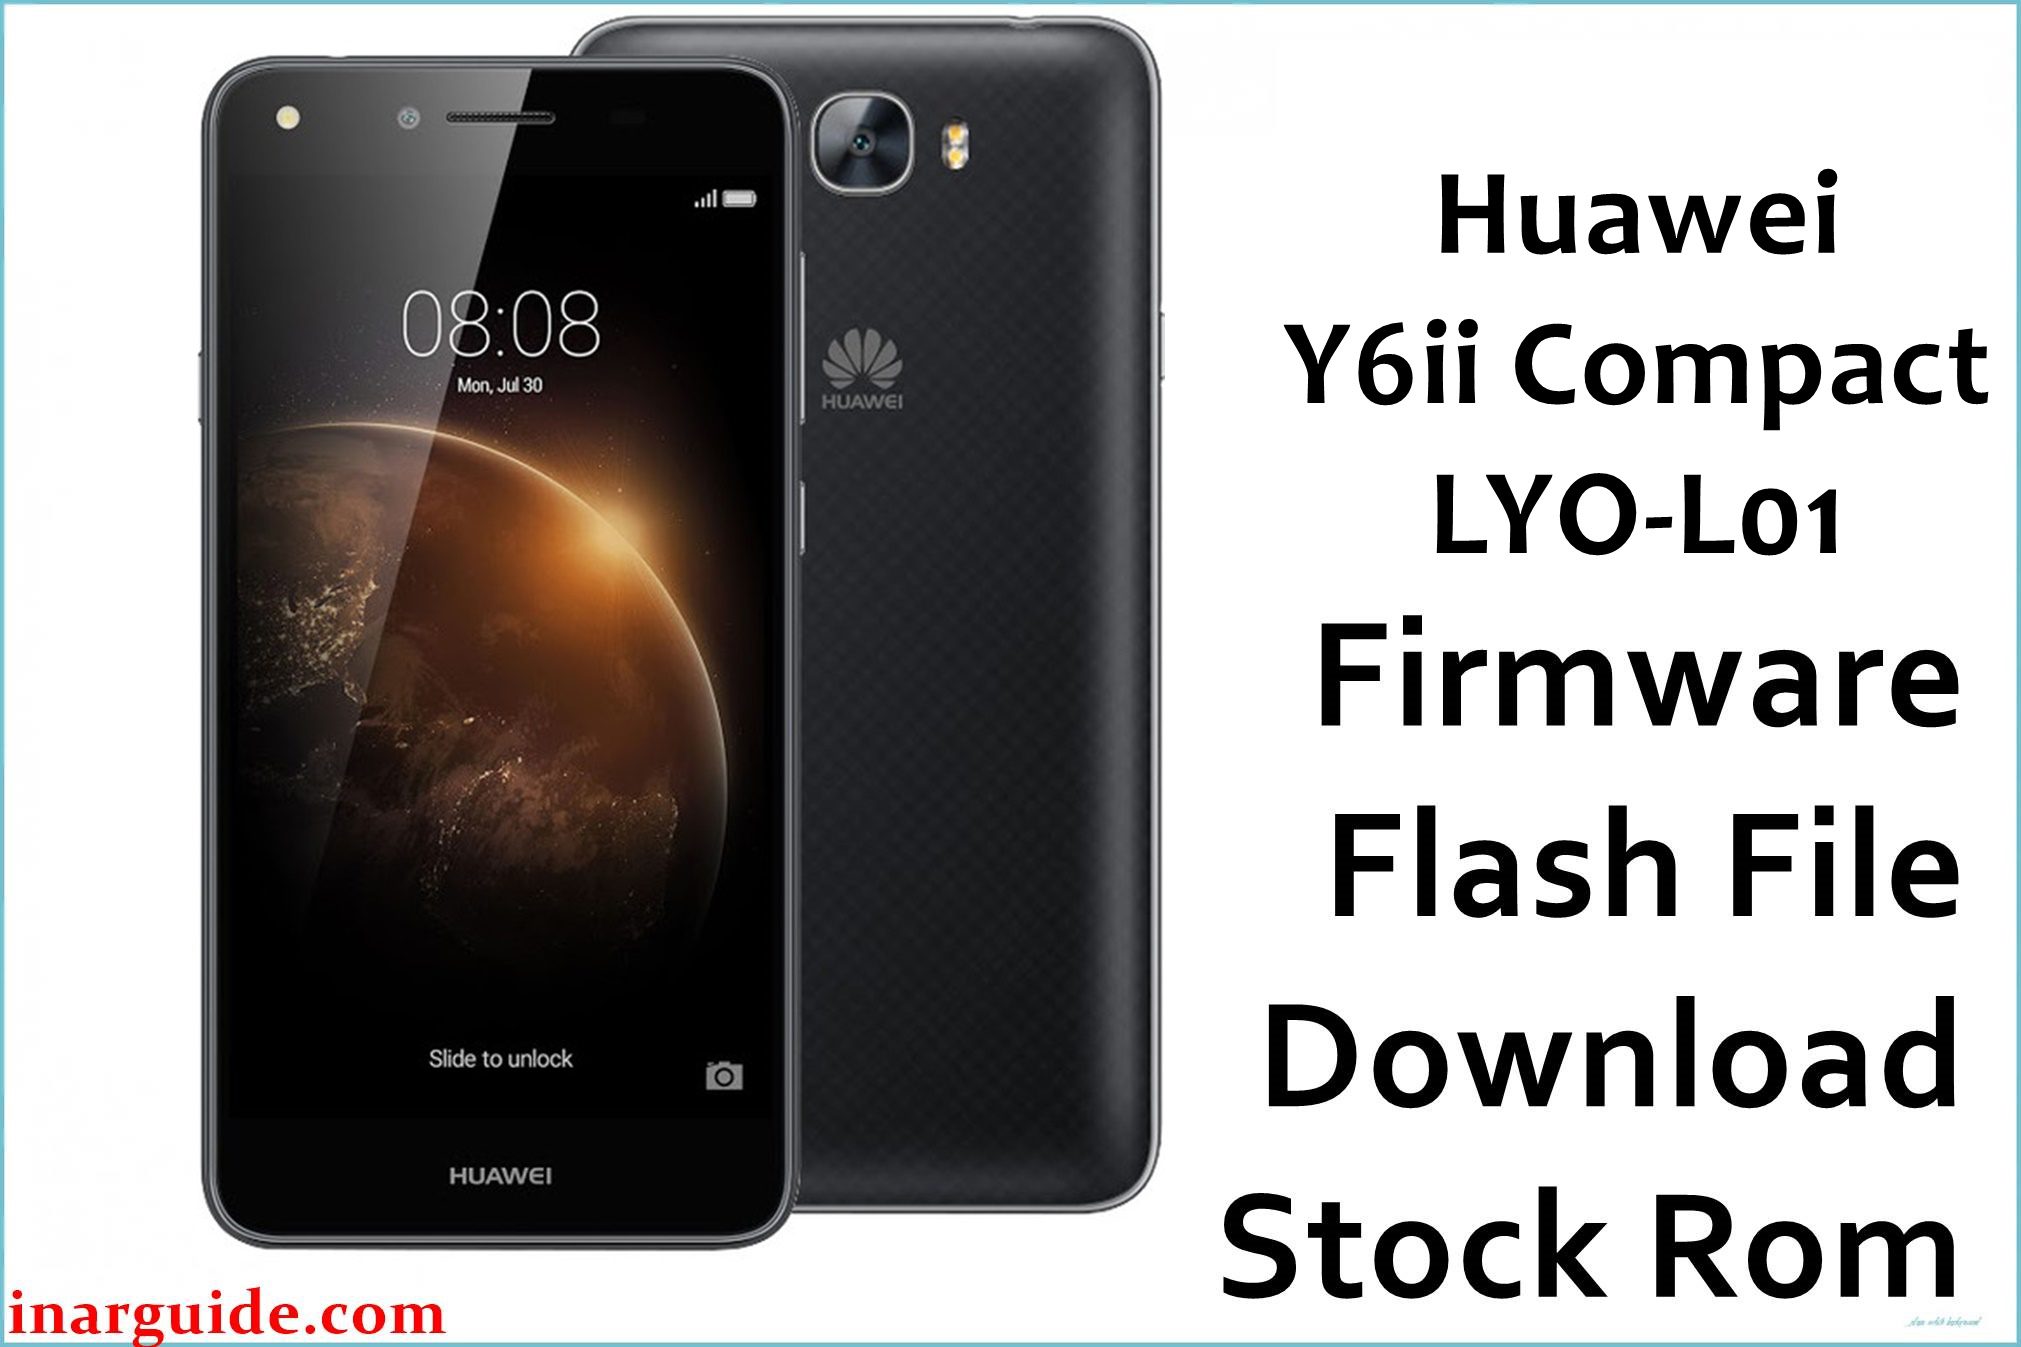 Huawei Y6ii Compact LYO L01